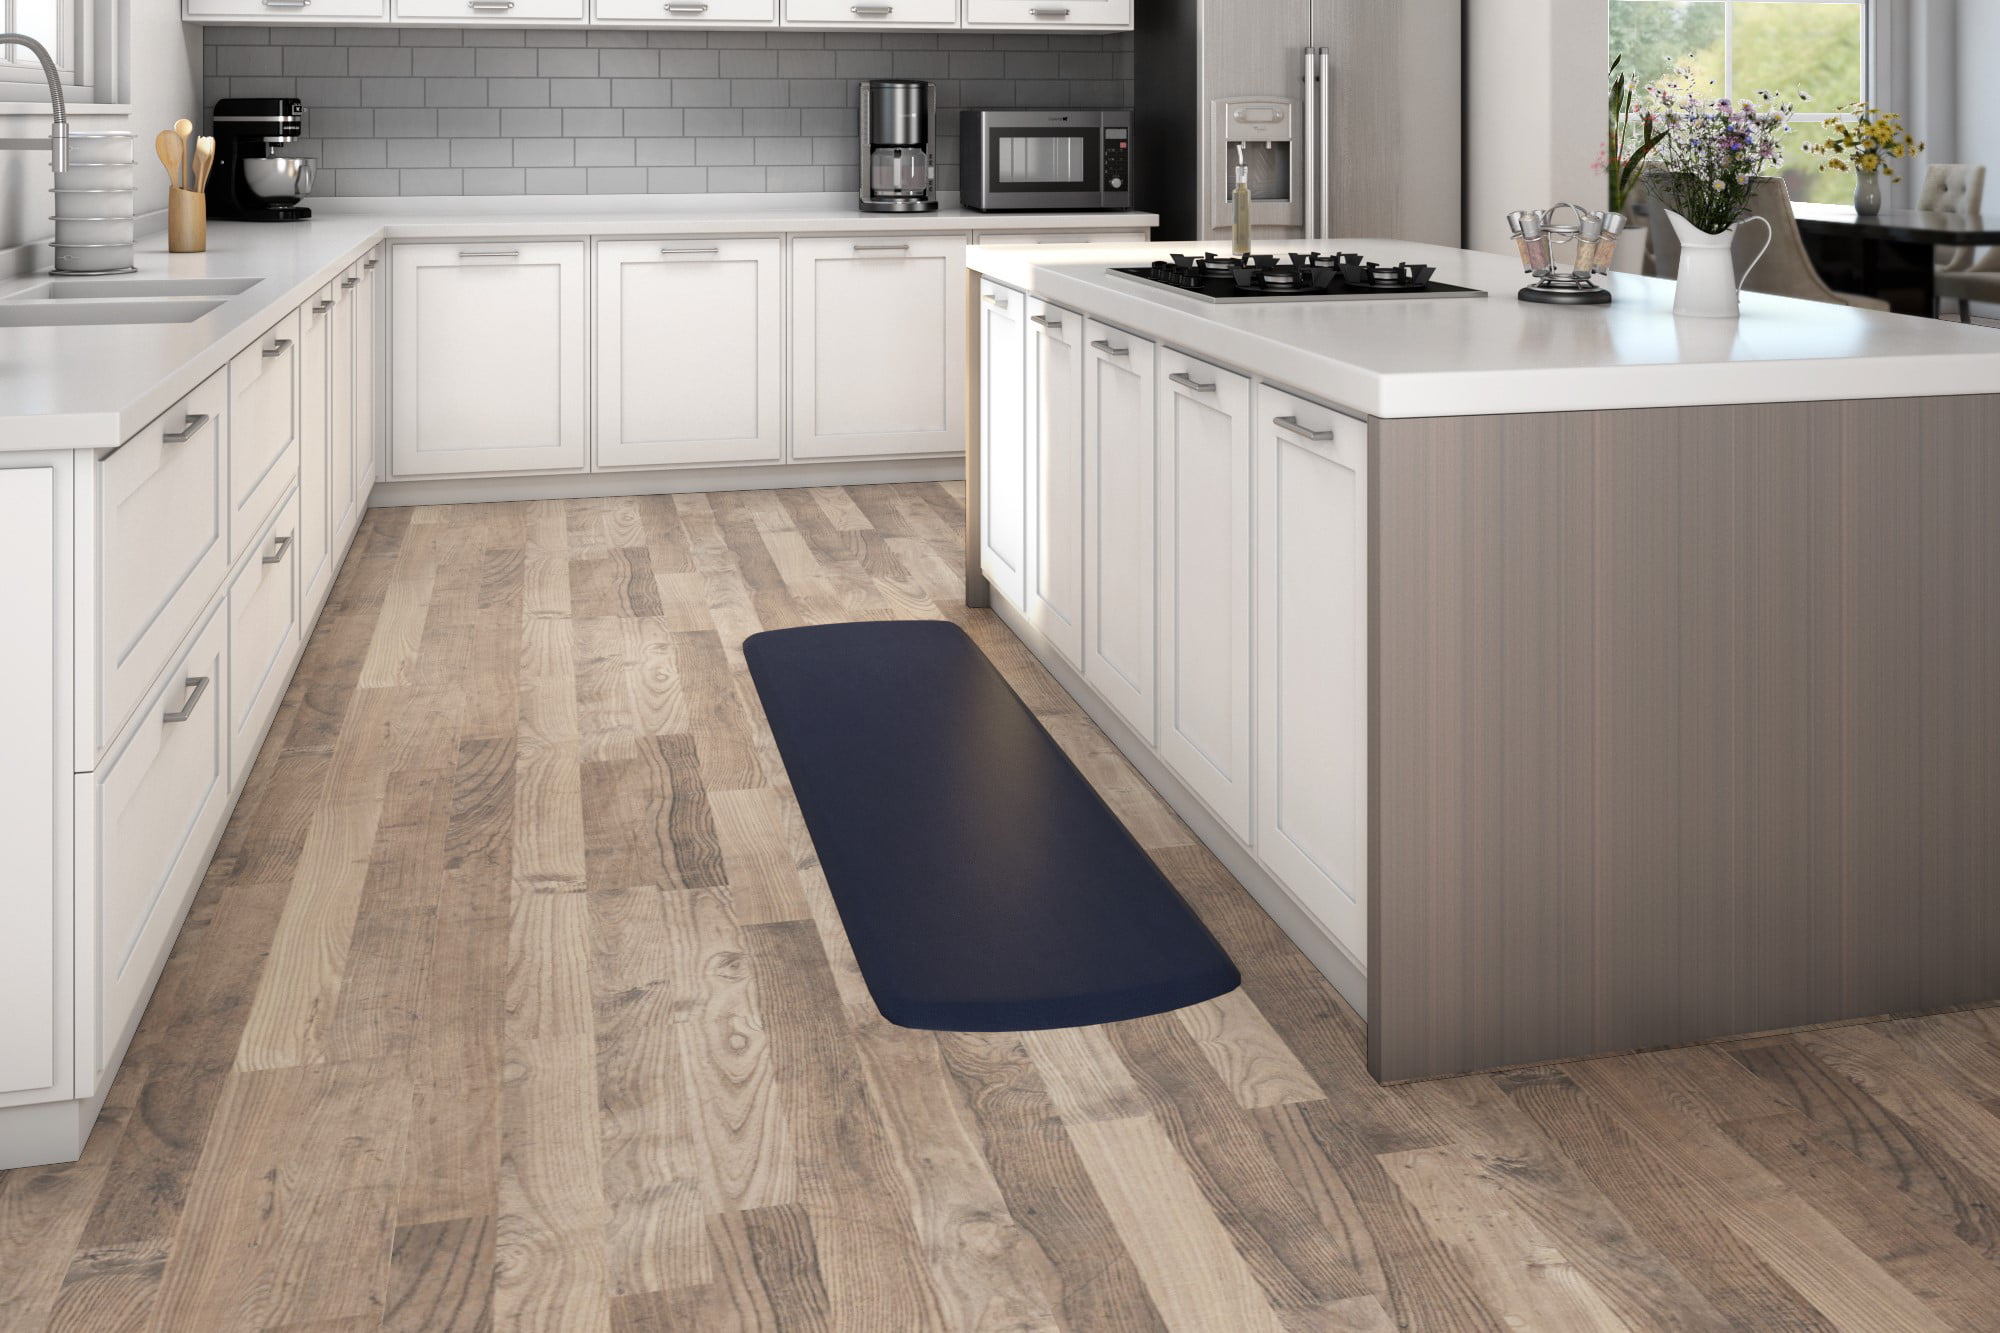 NewLife By GelPro Anti-Fatigue Kitchen Runner Comfort Floor Mat-20x72-Leather 